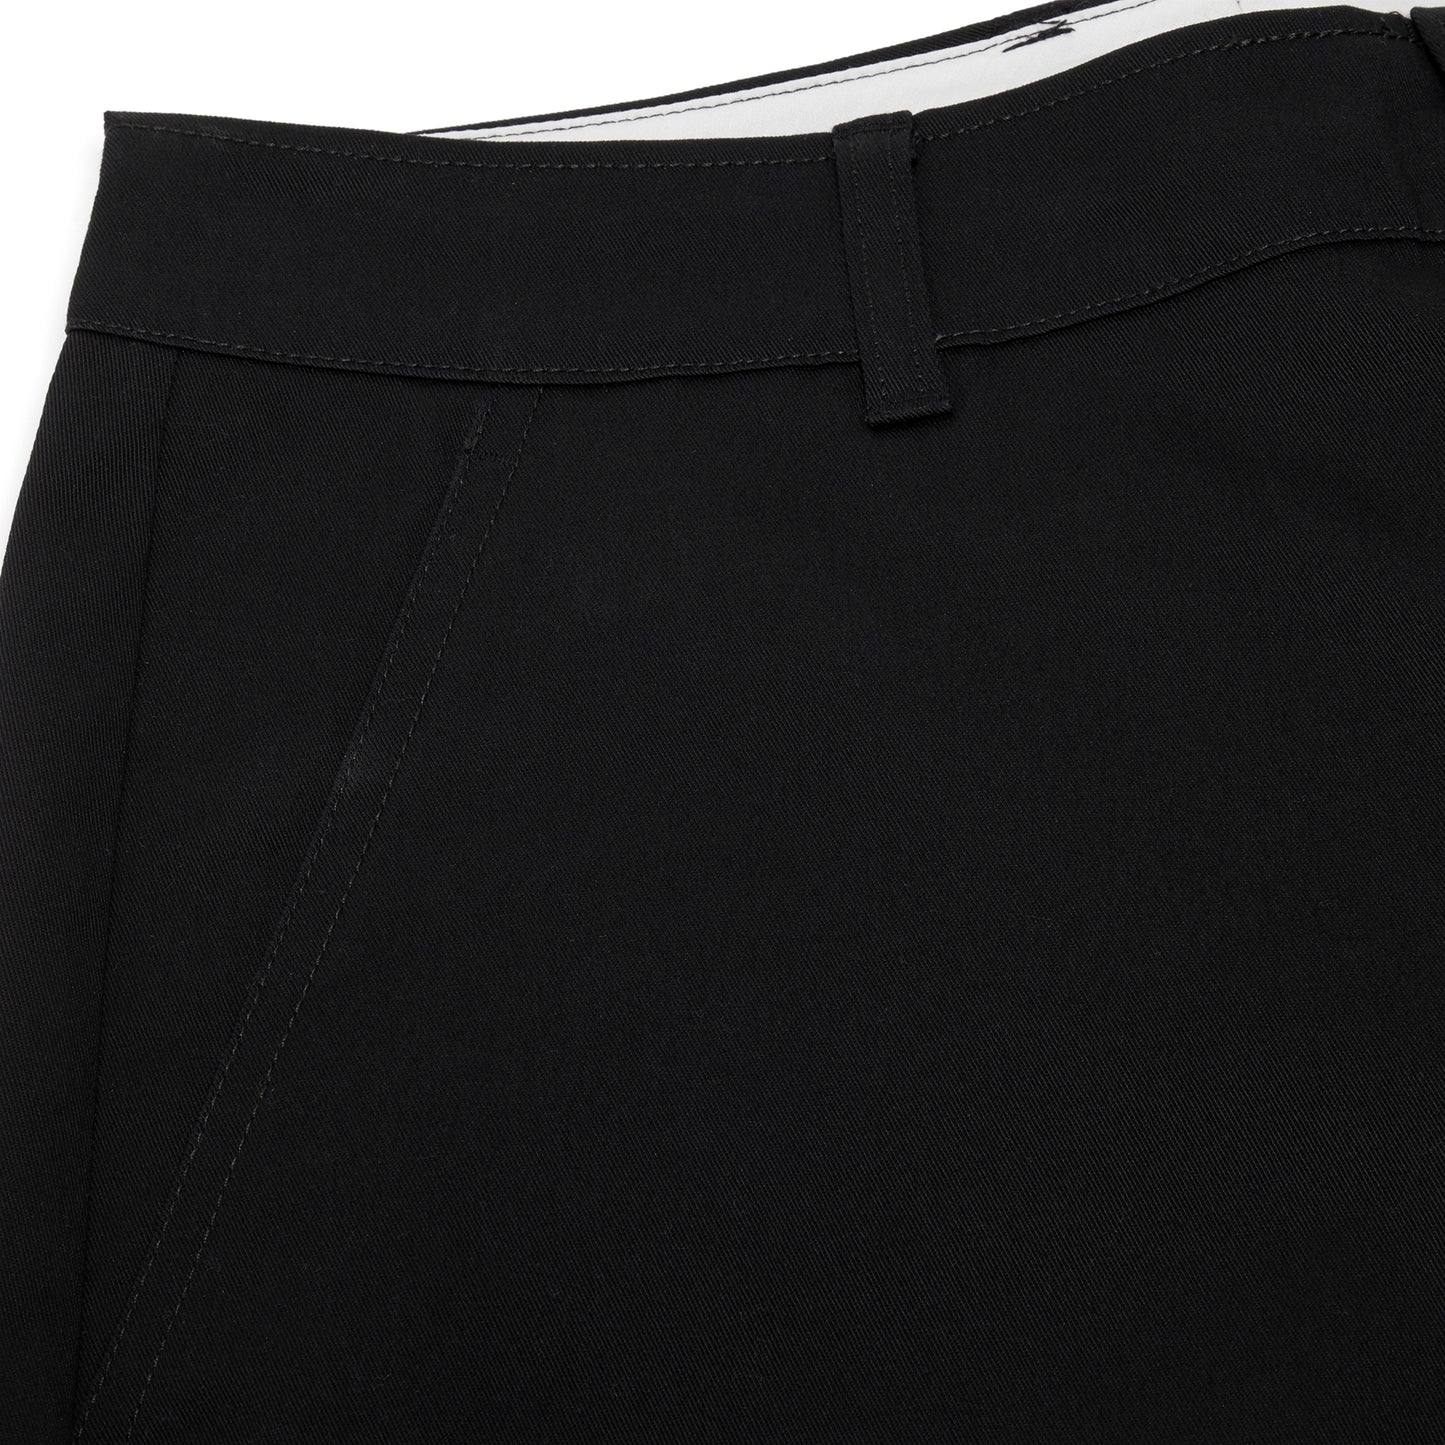 Nike Life Chino Pant (Black/White) – CNCPTS